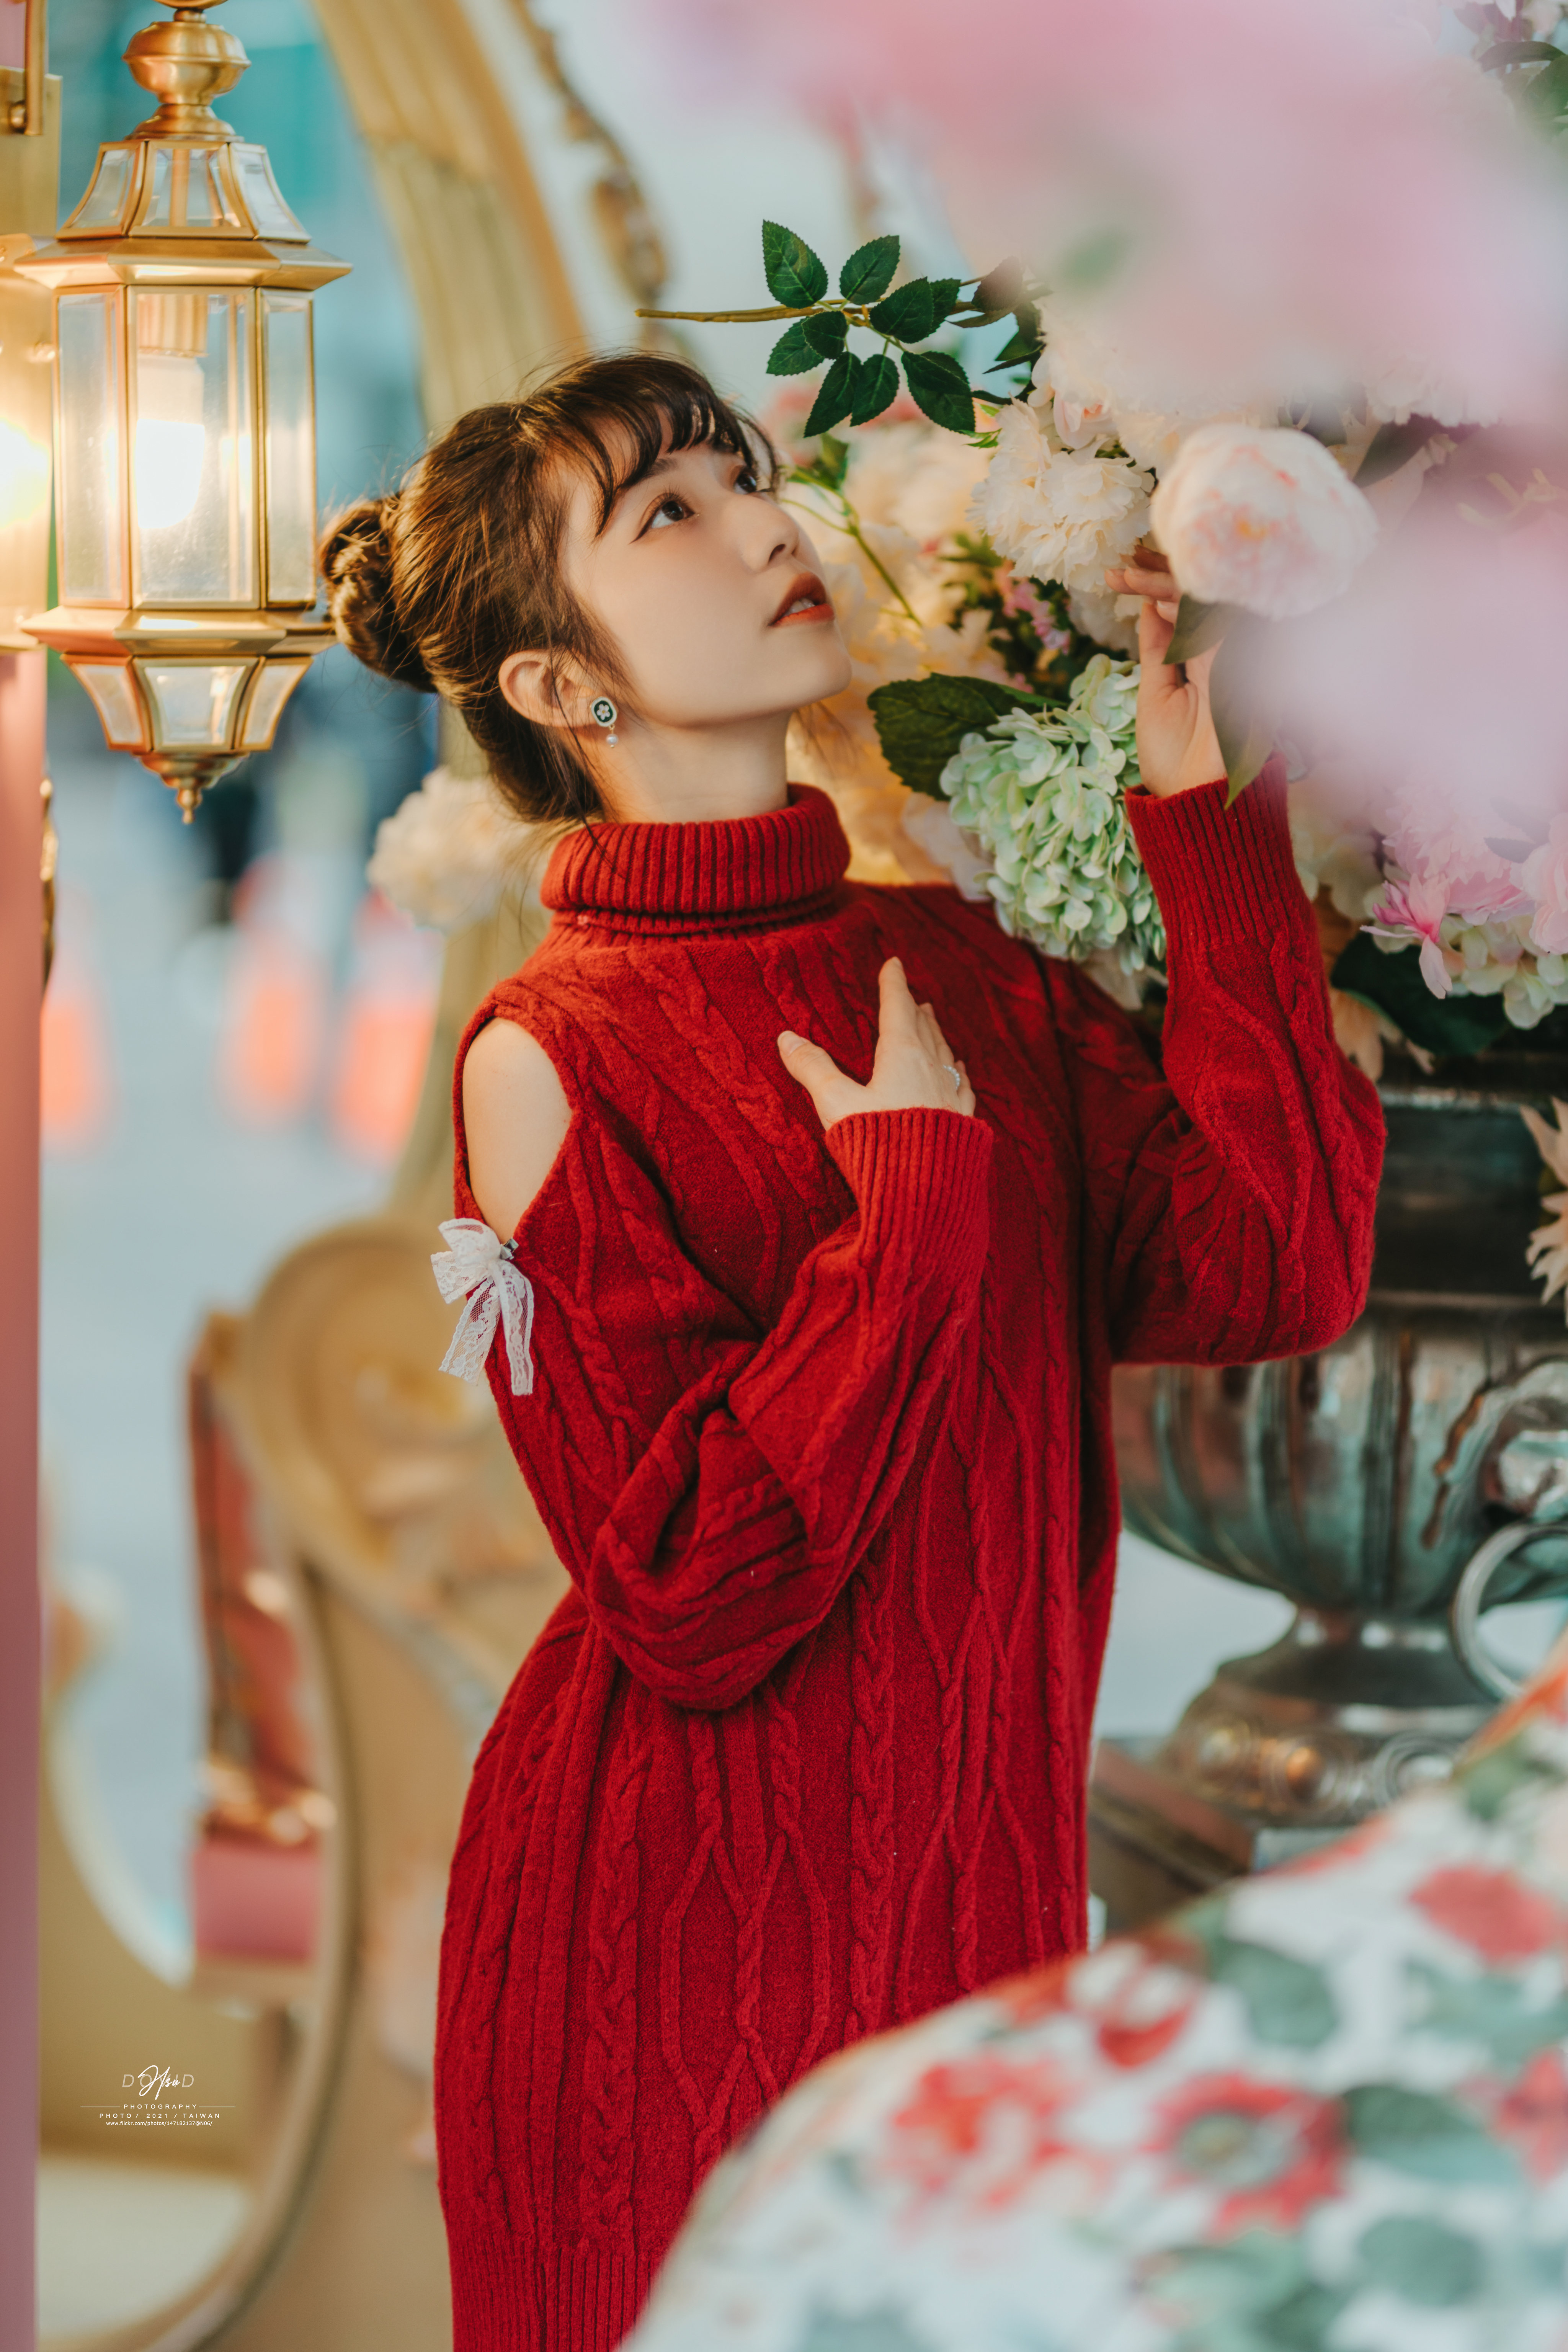 David Hsu Women Asian Brunette Hairbun Sweater Red Clothing Depth Of Field 4096x6144